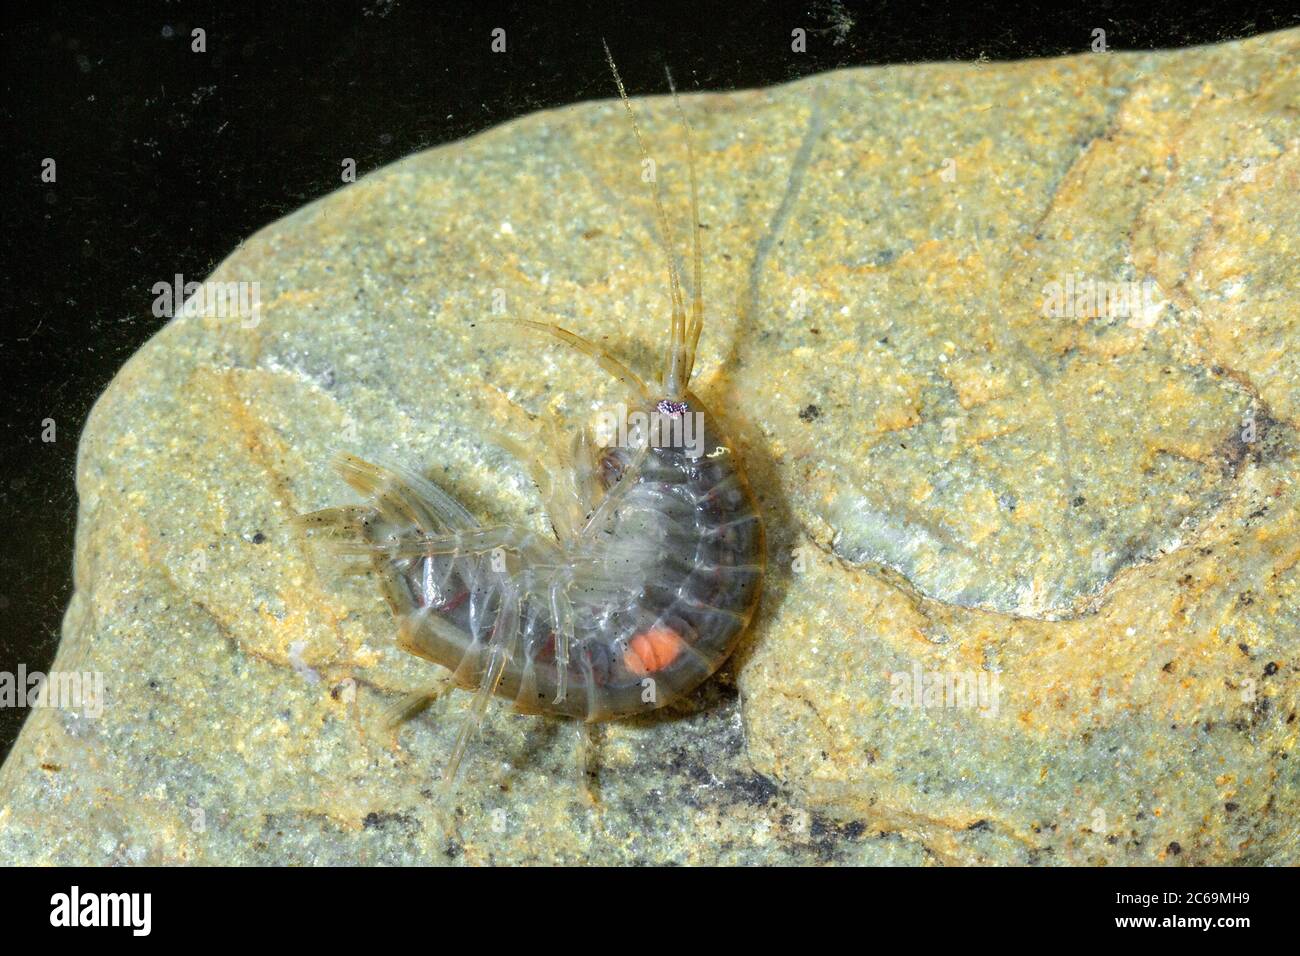 Lacustrine amphipod, Lacustrine shrimp, Freshwater shrimp, freshwater arthropod, freshwater amphipod (Gammarus roeseli), under water on a stone, Germany Stock Photo